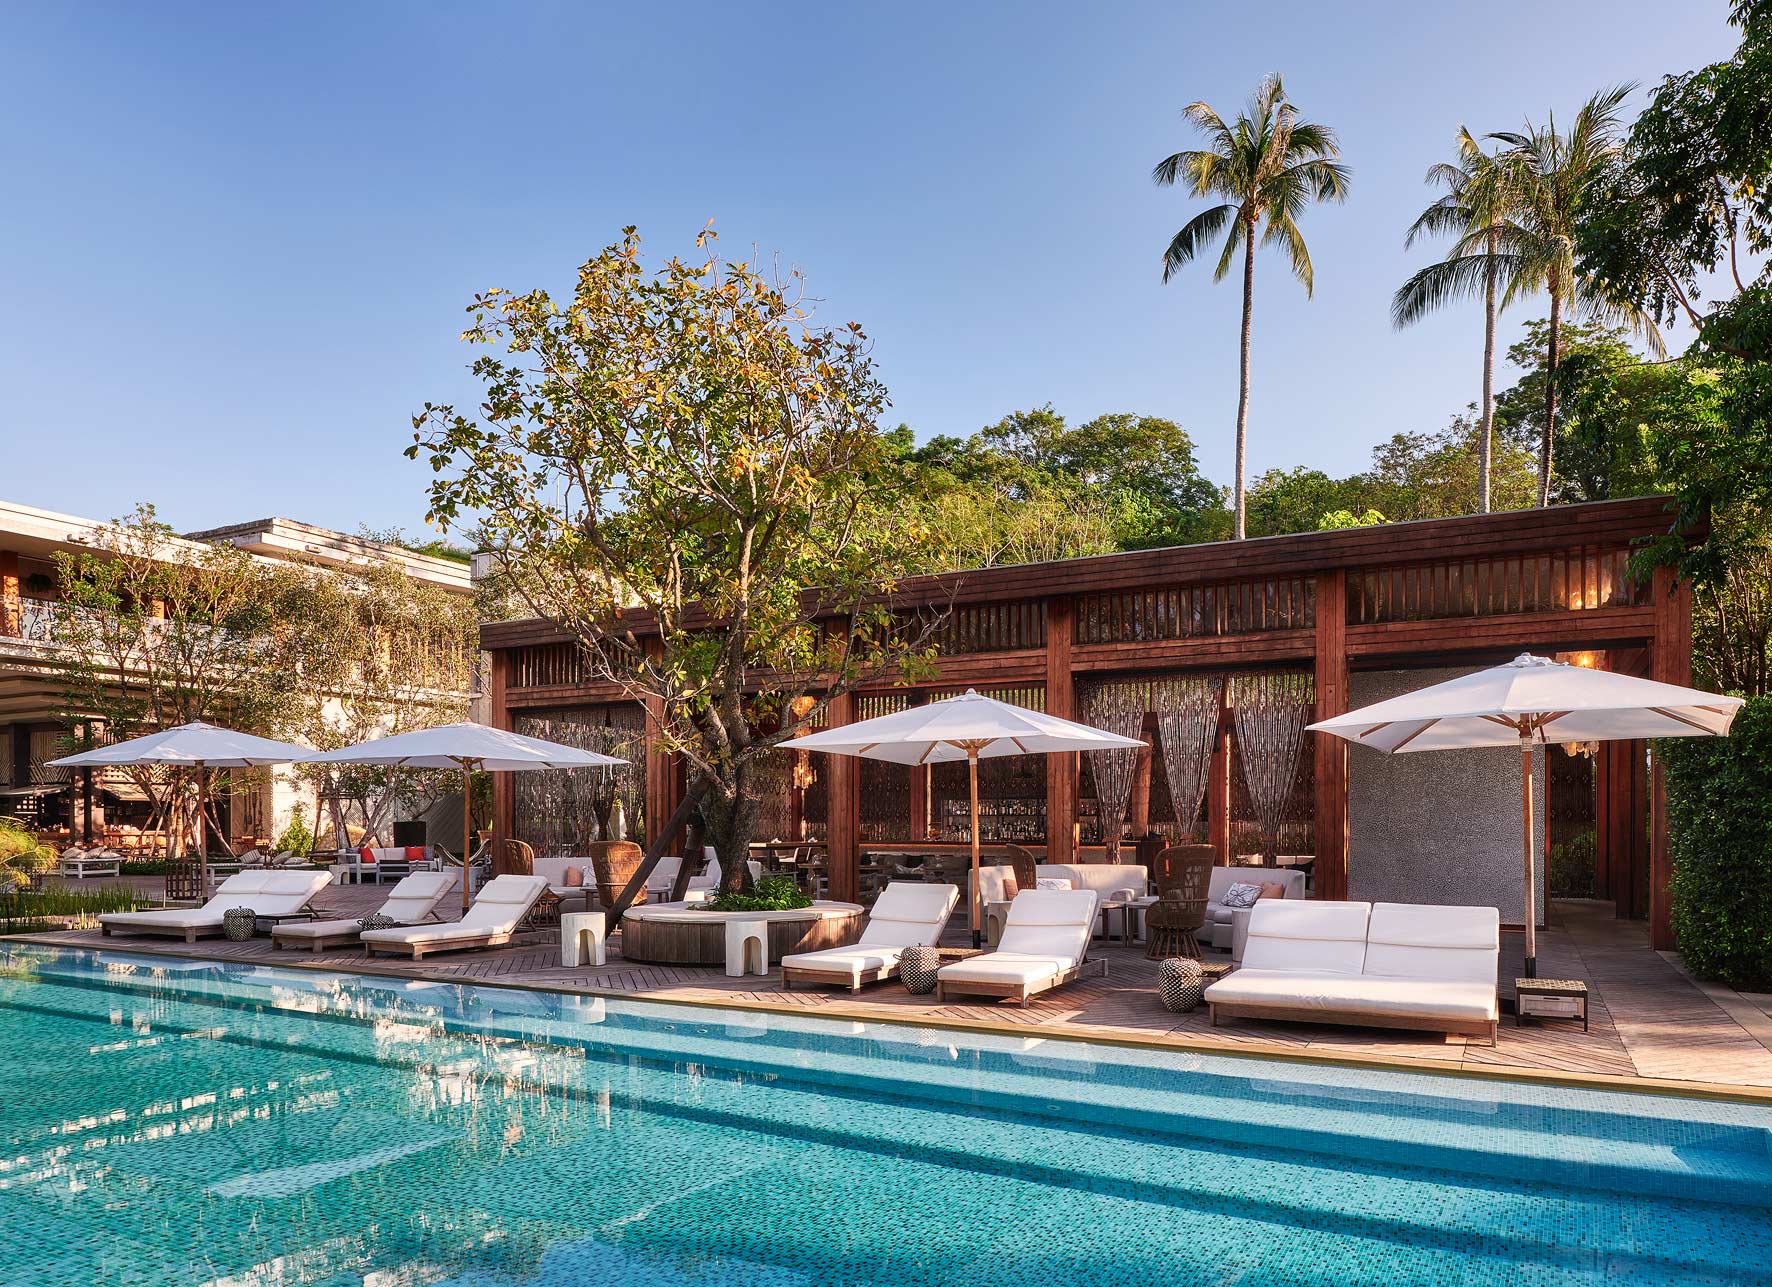 Rosewood Hotel, Phuket, Thailand. Architectural photographer Asia 